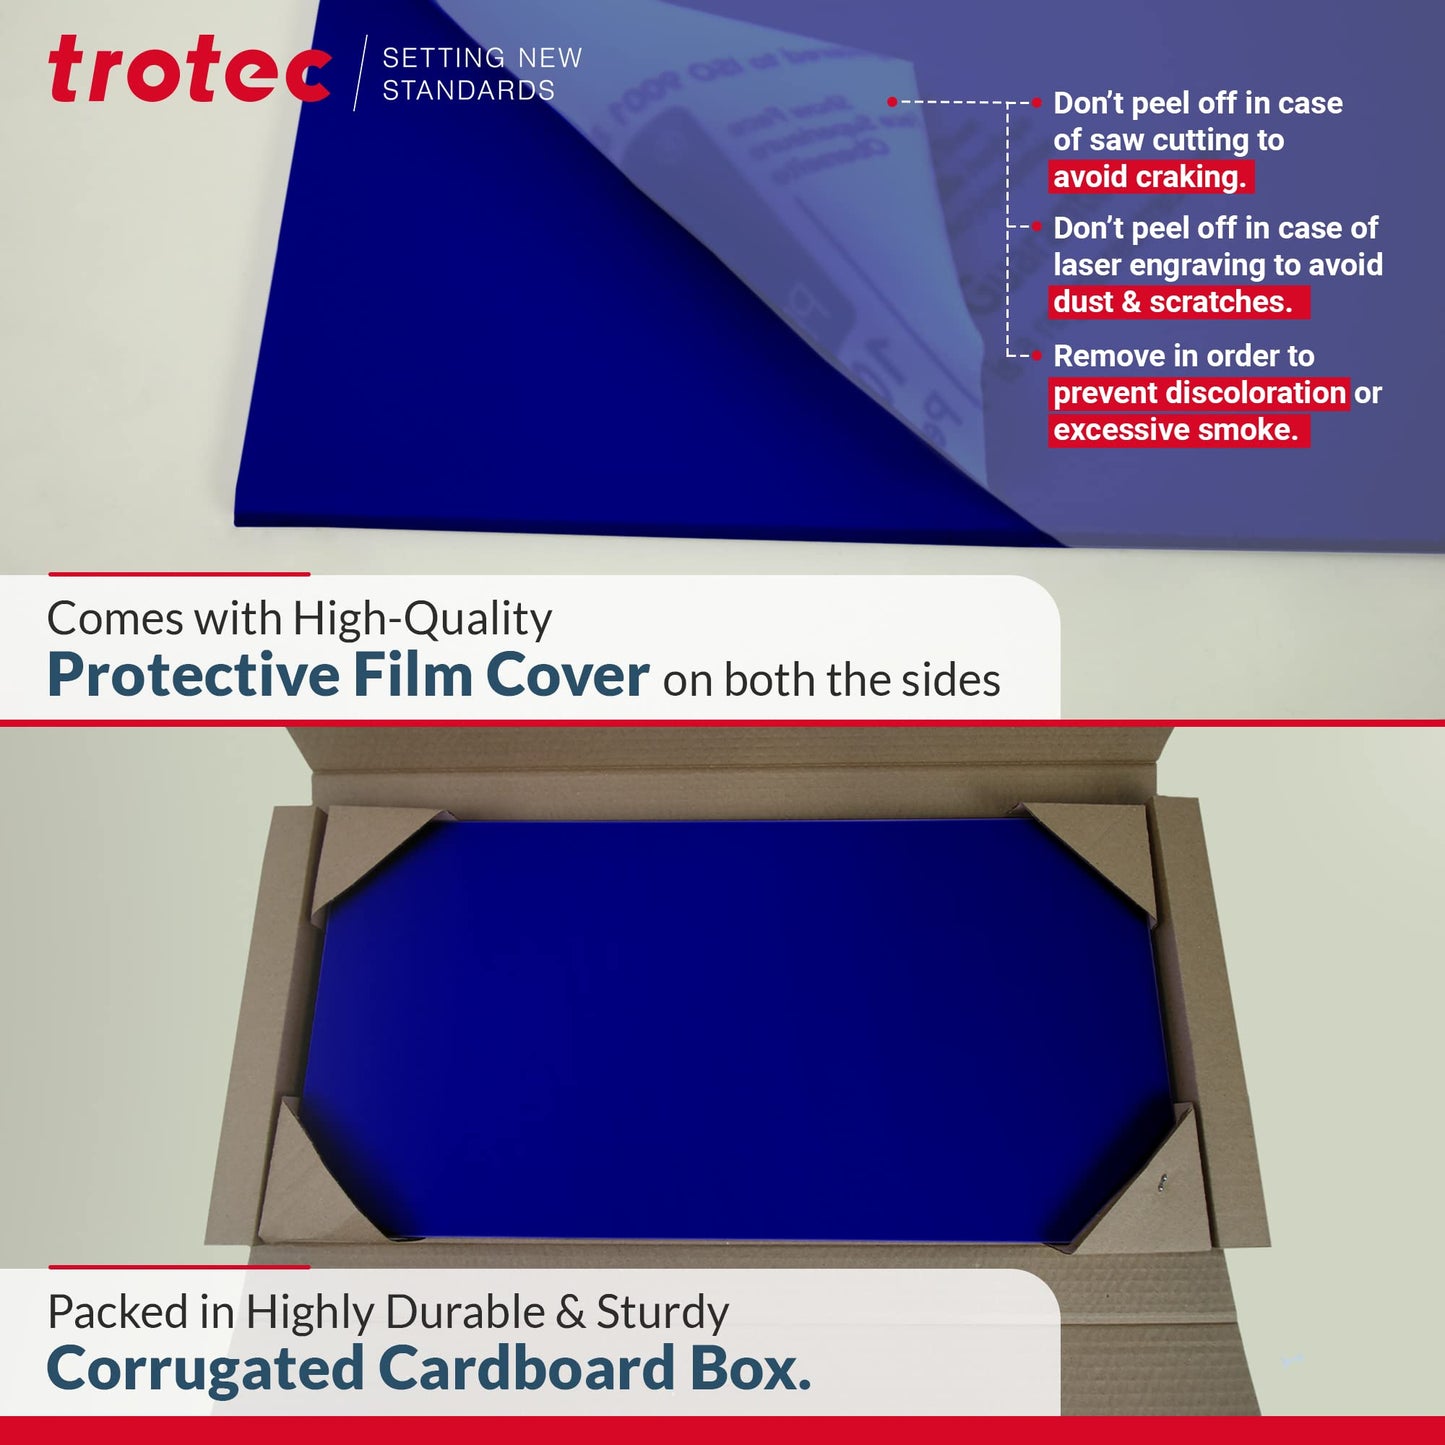 Trotec TroLase | 12"x24.25" x1/16", 4 Pcs | Sapphire/White | 2 Ply | Modified Acrylic | Laser Engraving Double Color Plastic Sheet | Engraving Blanks